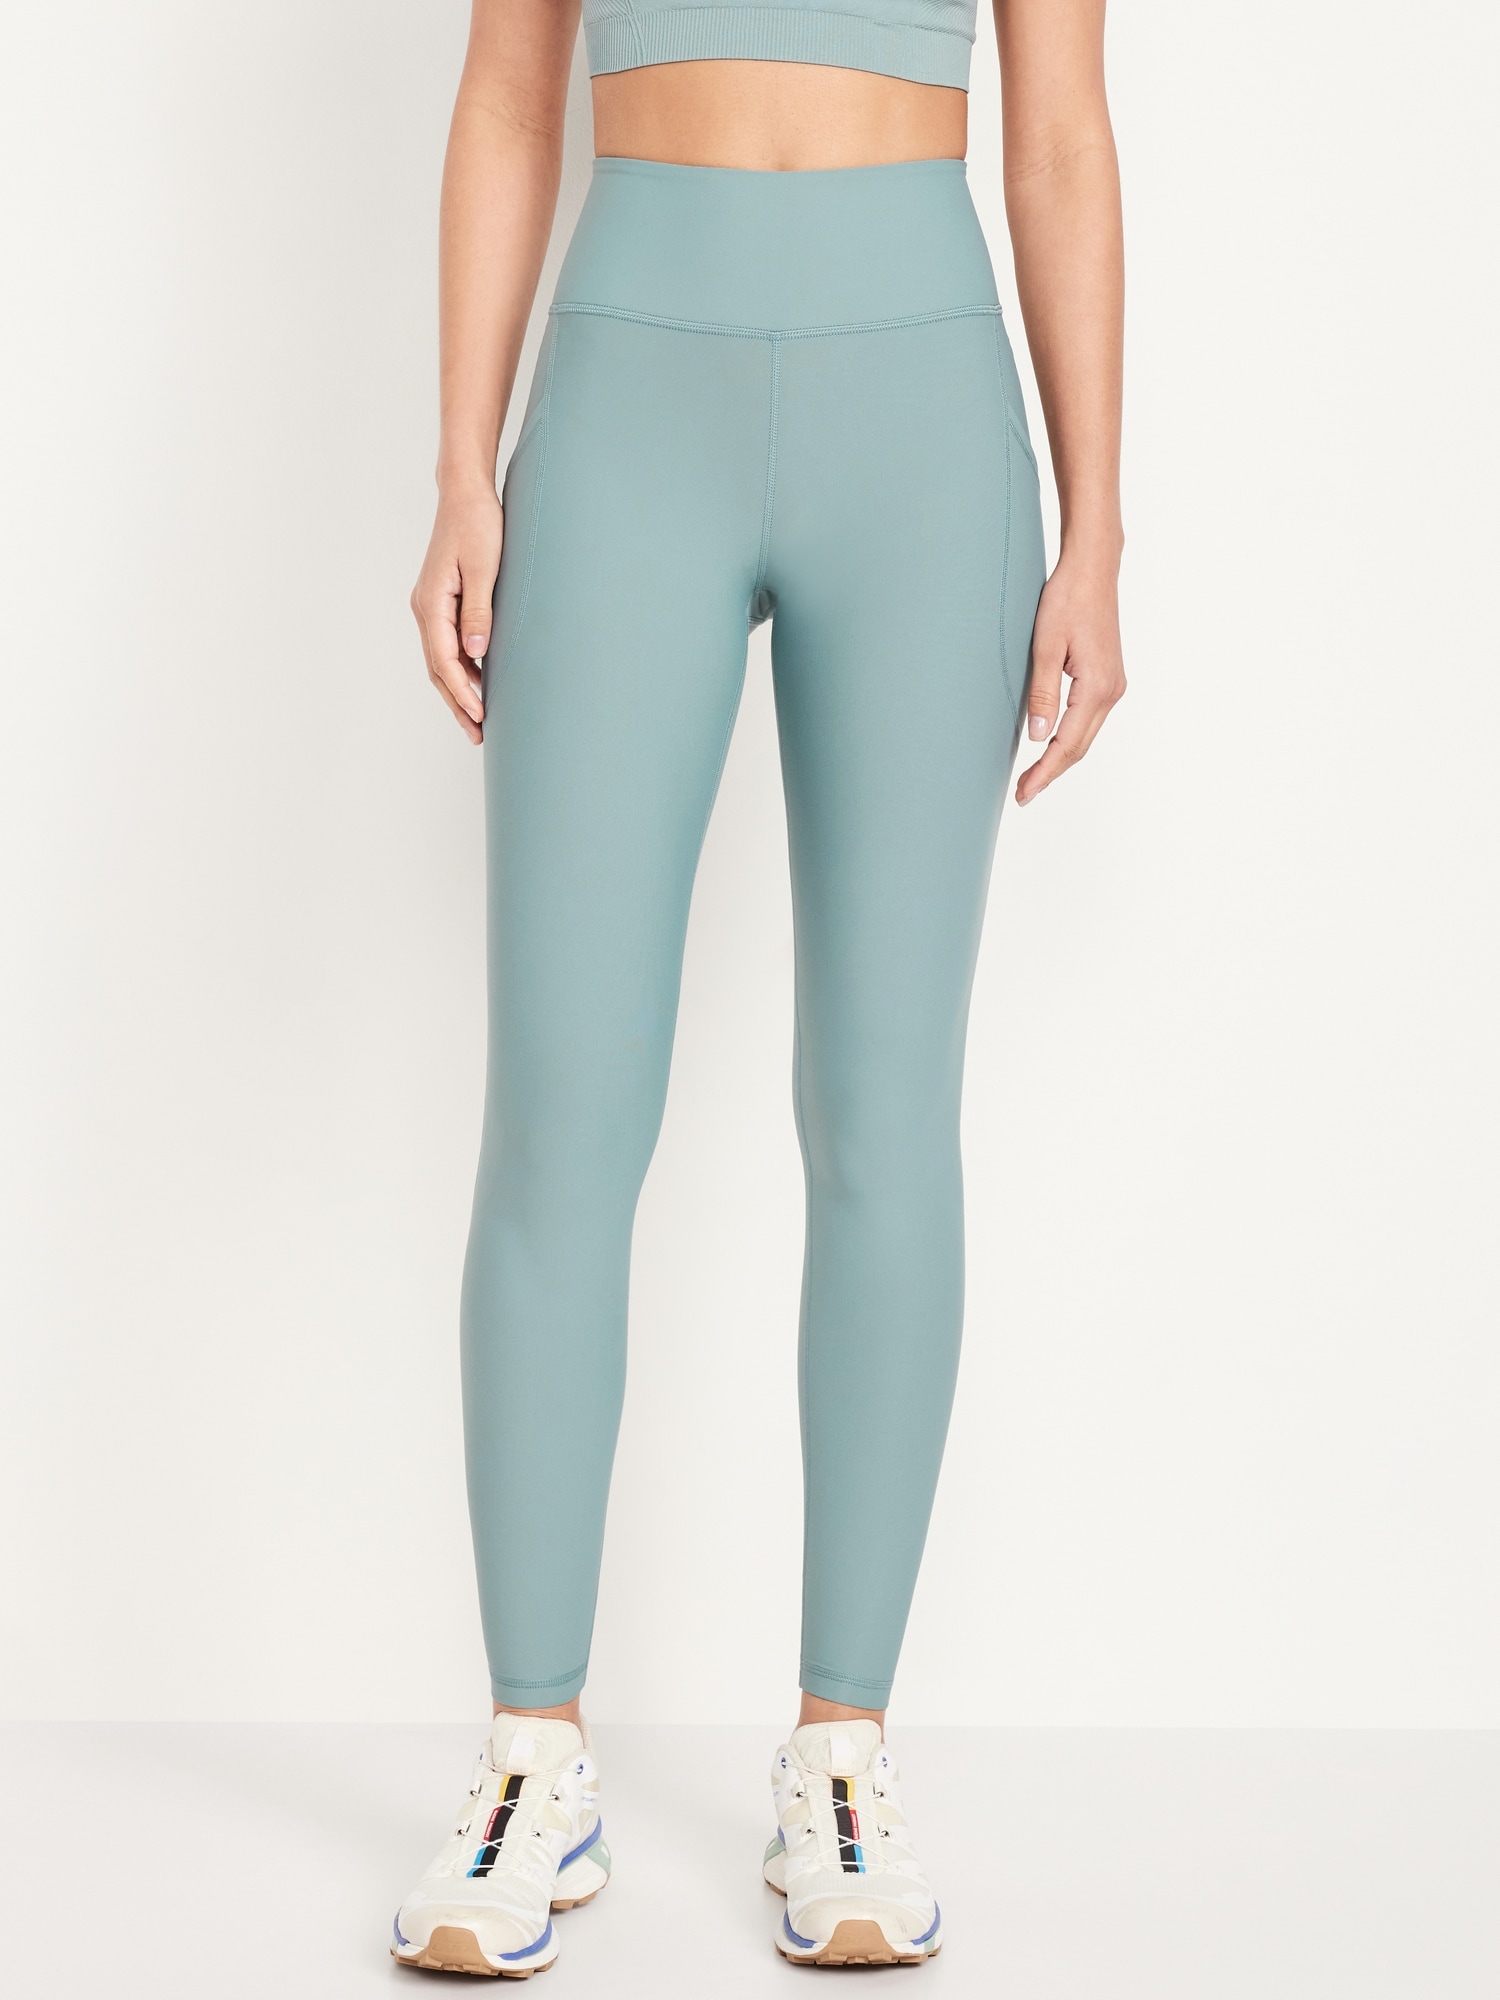 EHQJNJ Petite Yoga Pants Seamless Solid Color Skinny High Waist